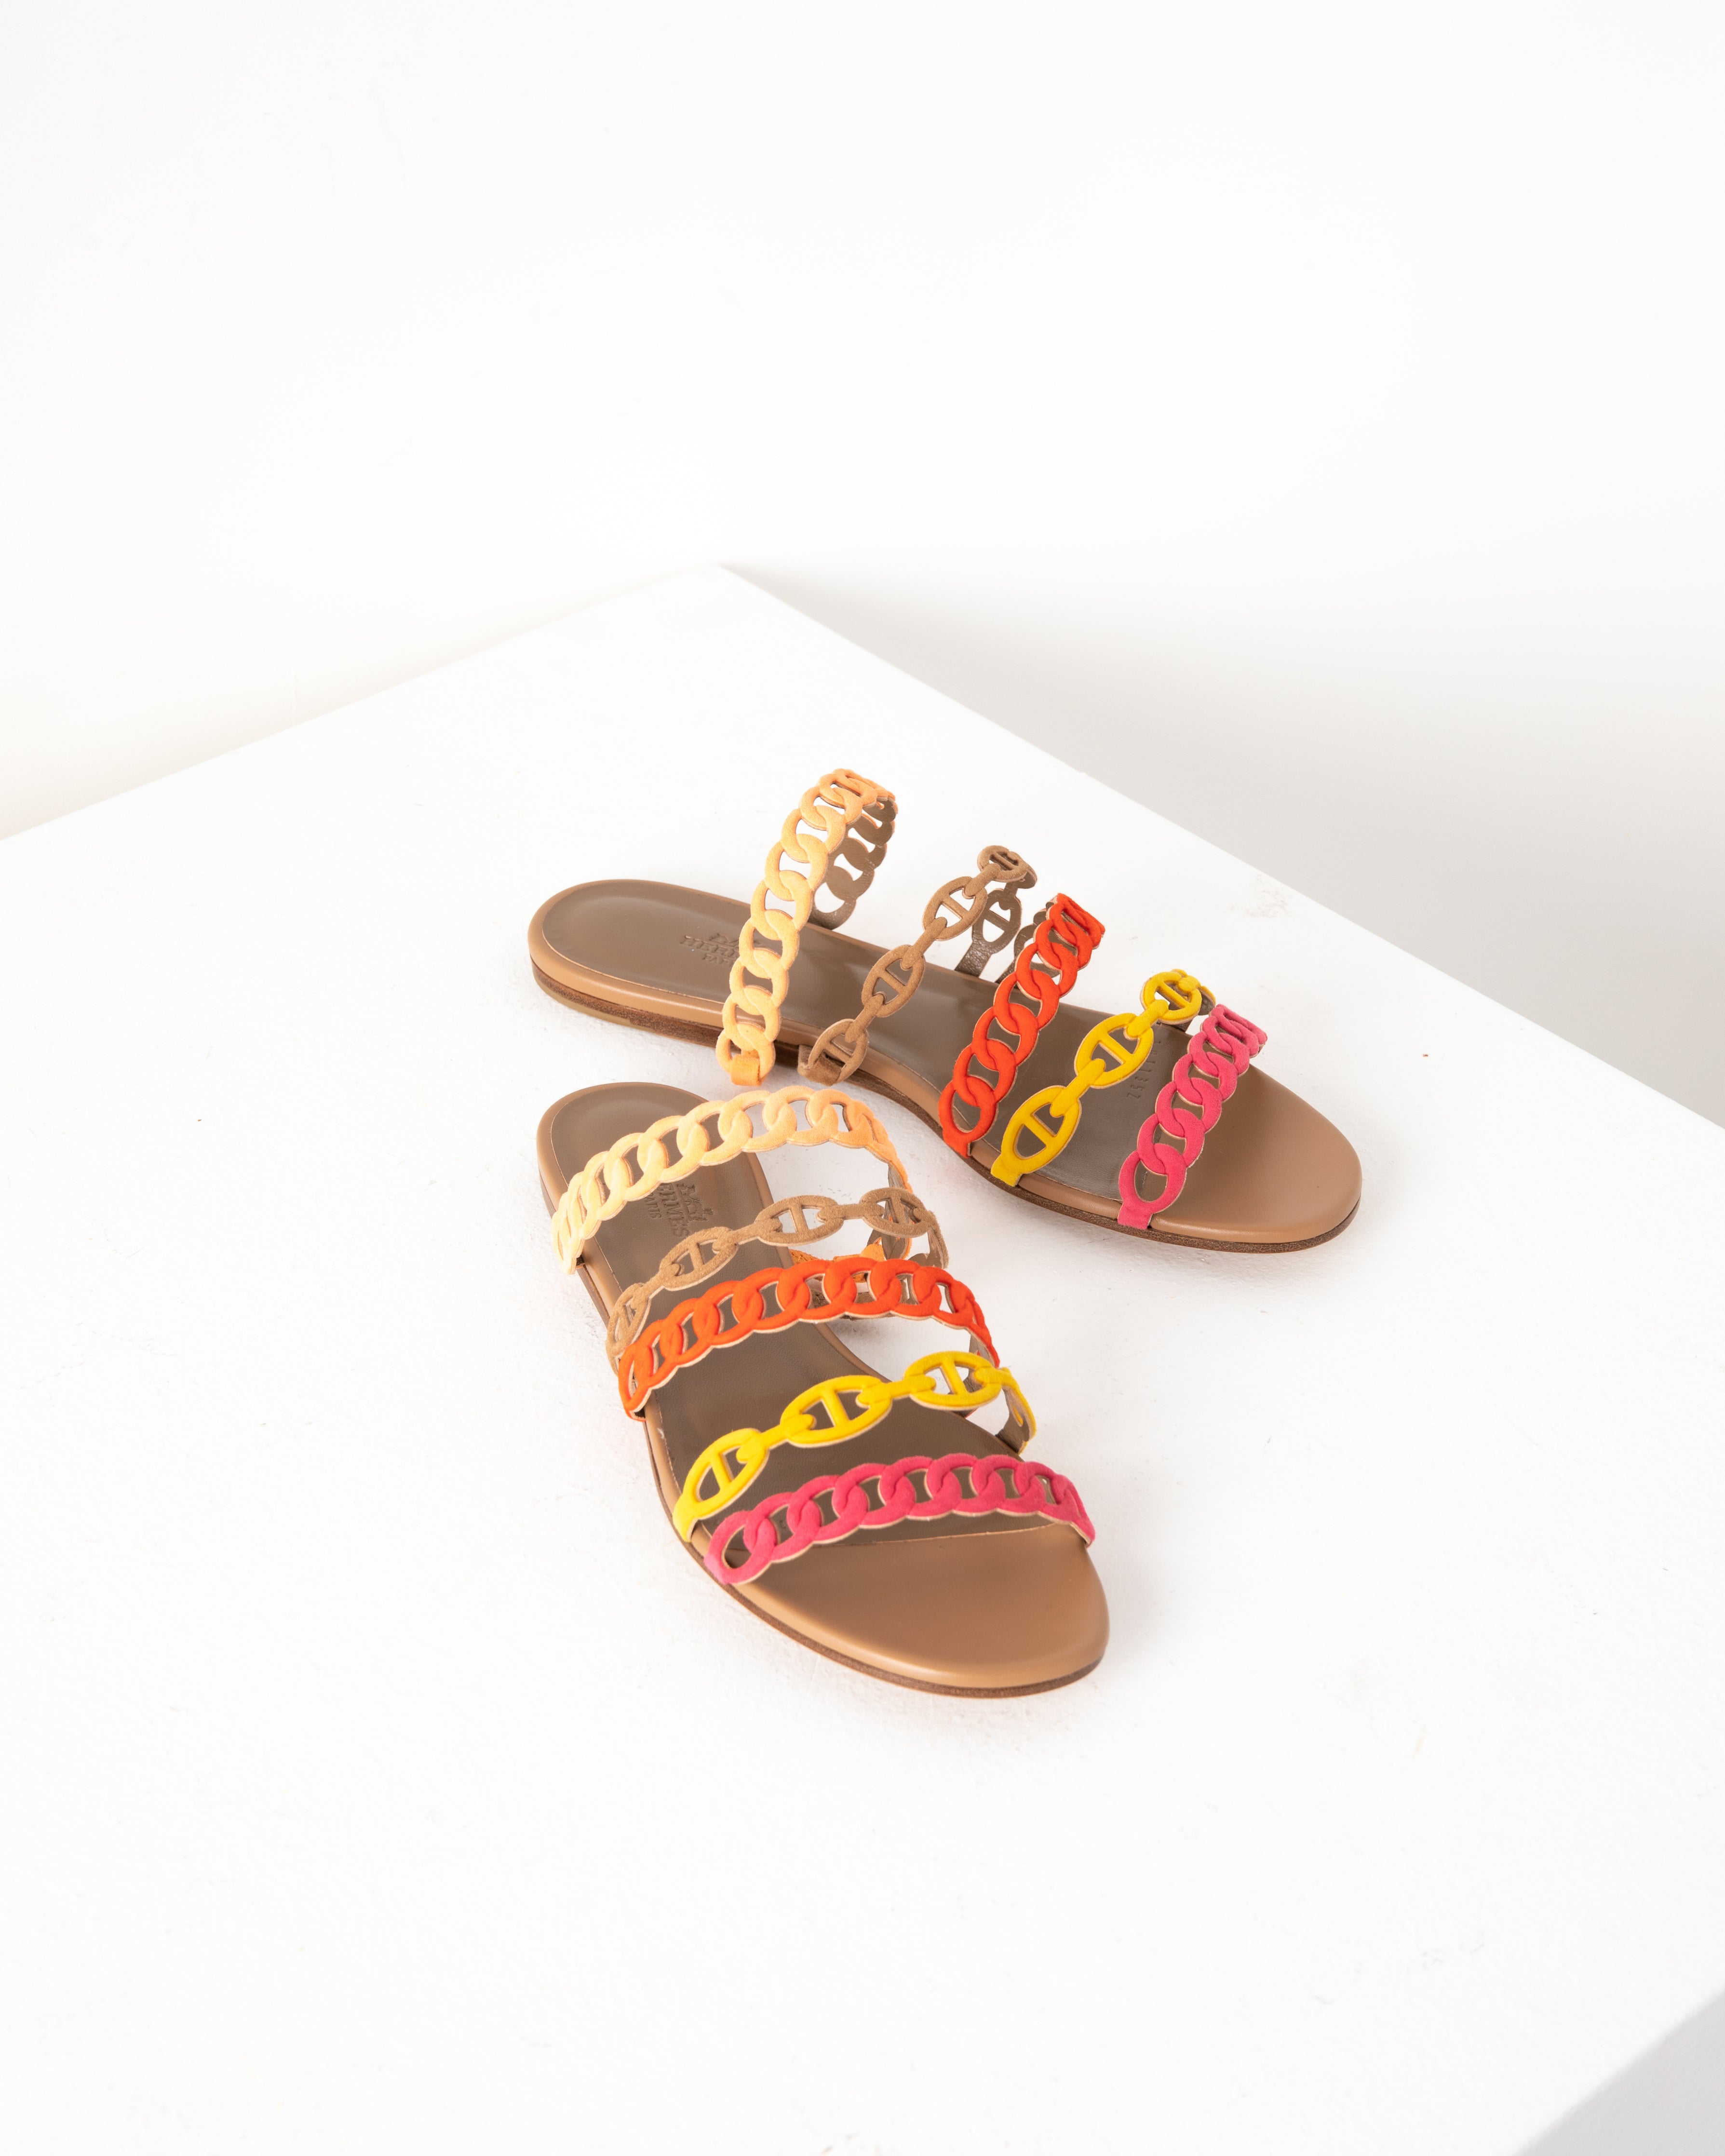 Shop HERMES Sandals (H232153Z D0360) by amakin-skywalker | BUYMA